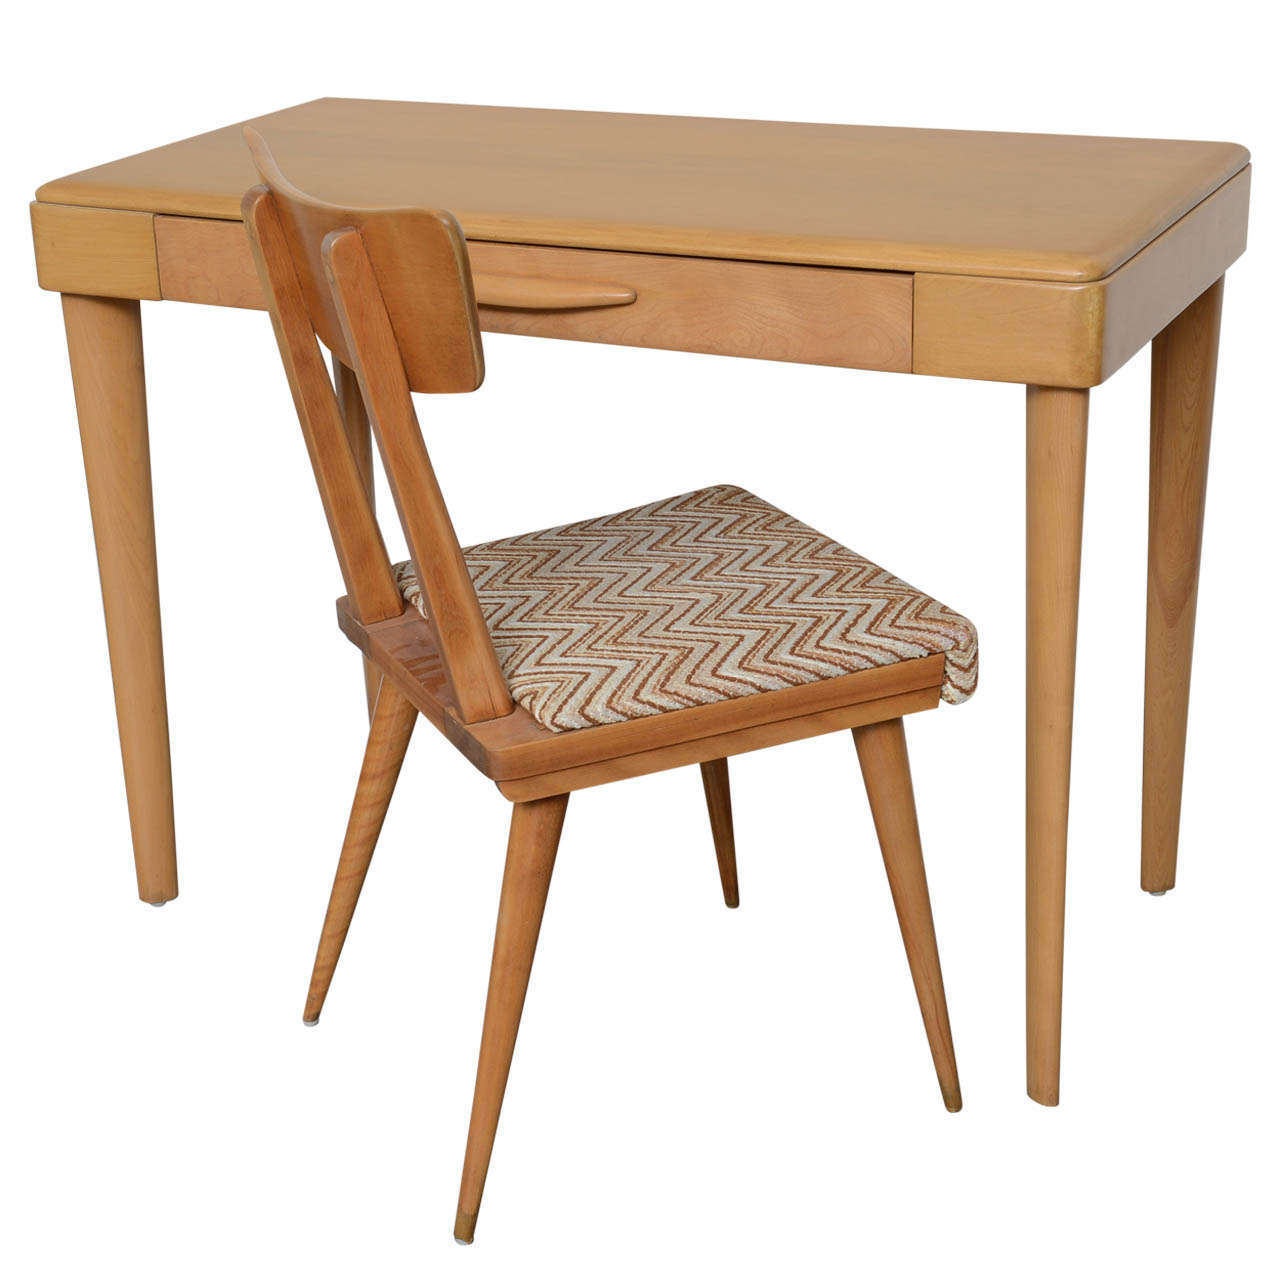 Heywood Wakefield Maple Desk 1960s--Chair sold Desk comes solo